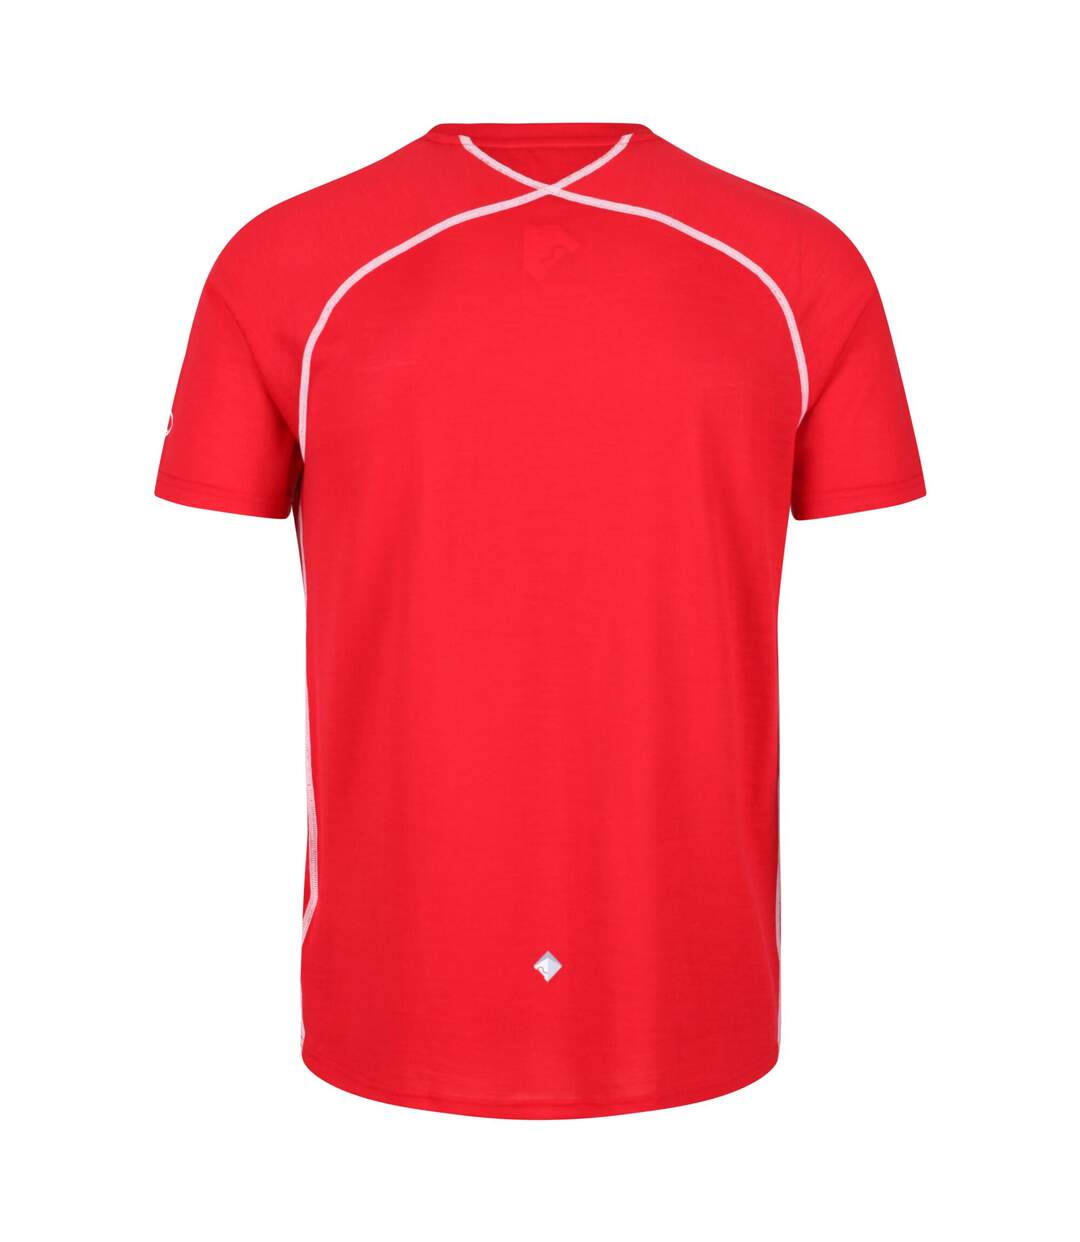 Regatta - T-shirt TORNELL - Hommes (Rouge) - UTRG4935